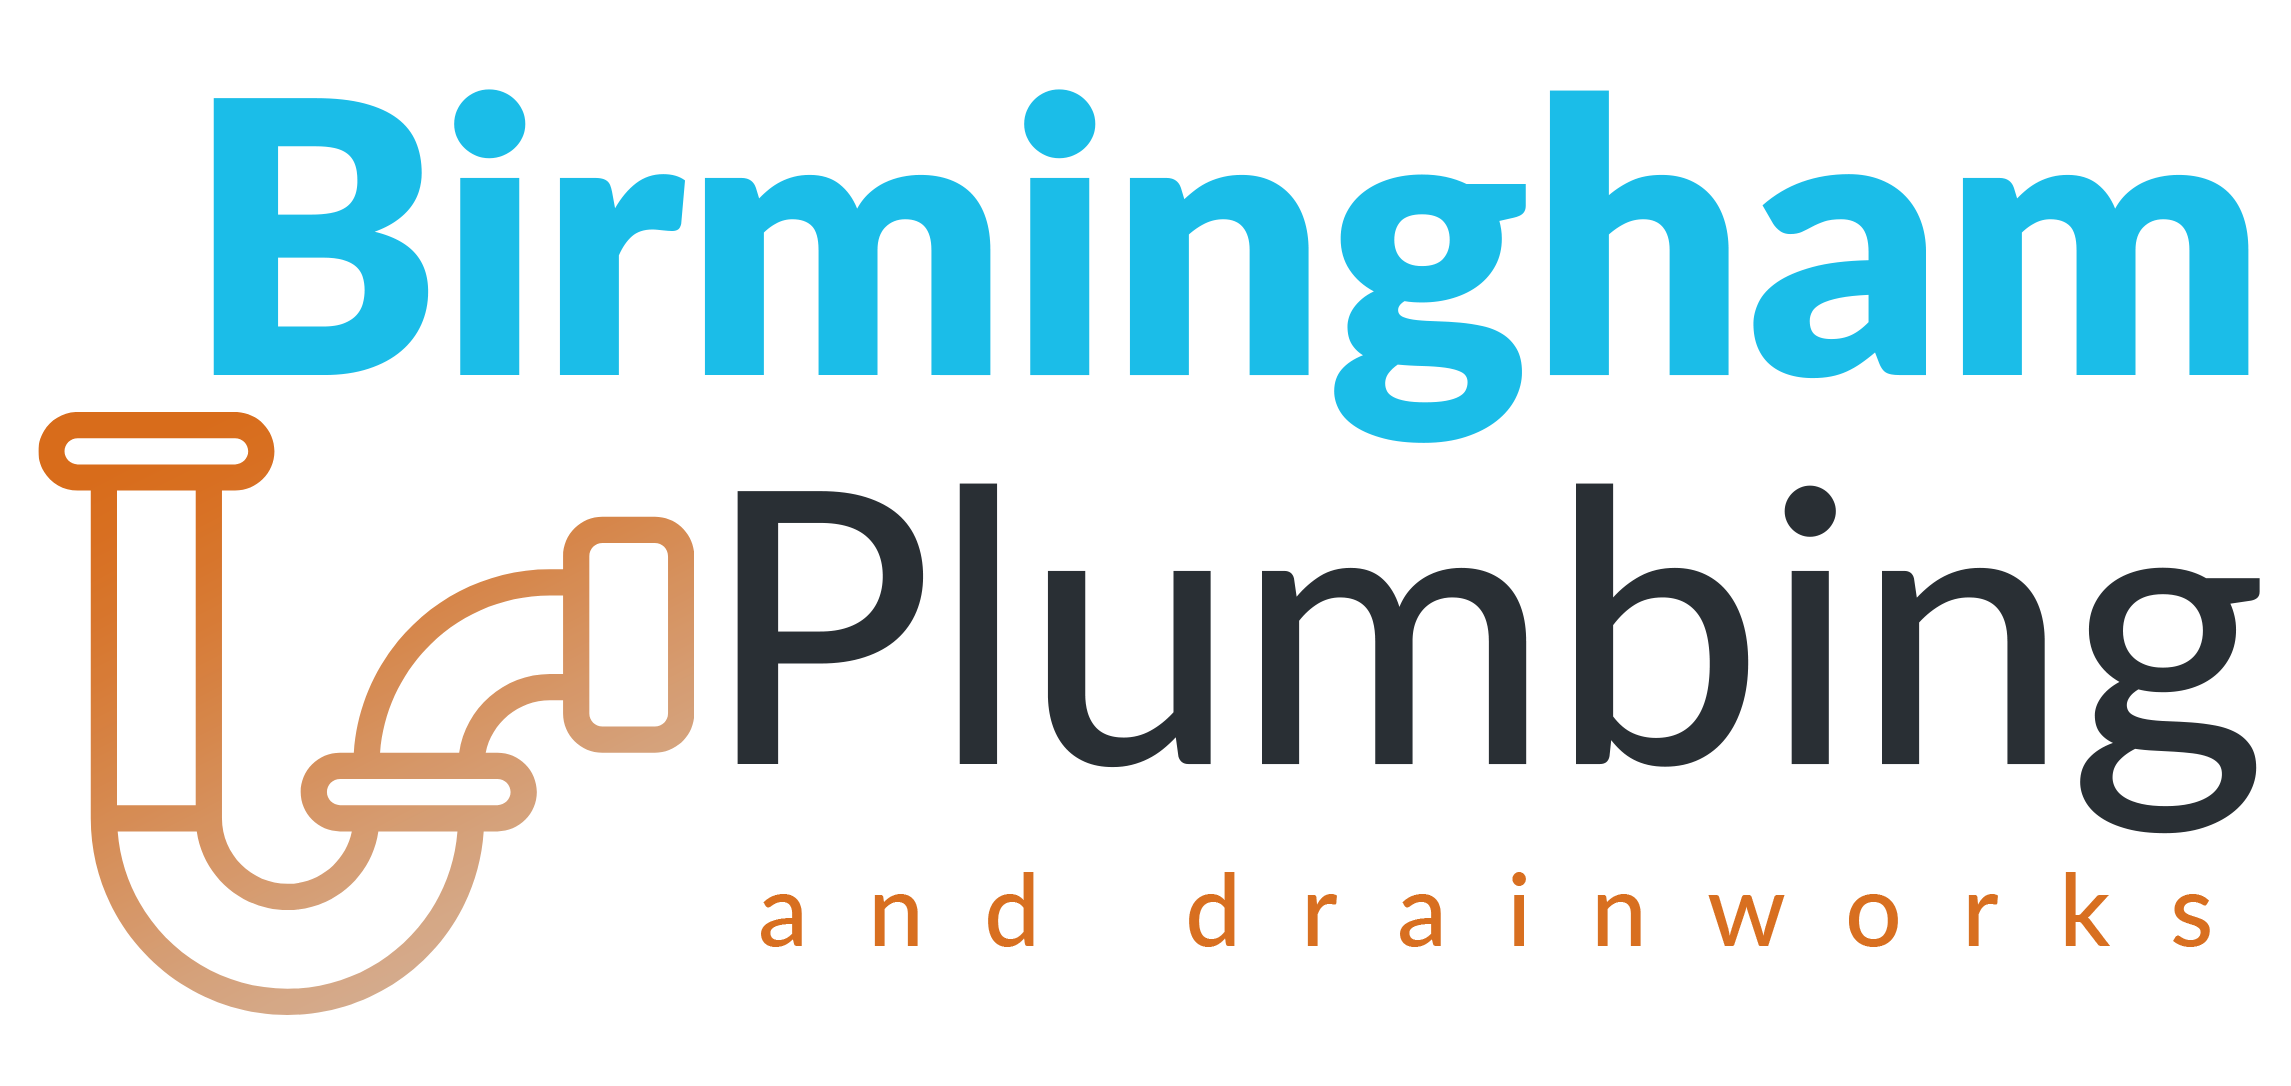 Birmingham Plumbing and Drainworks Receives 2023 Best of Birmingham Award